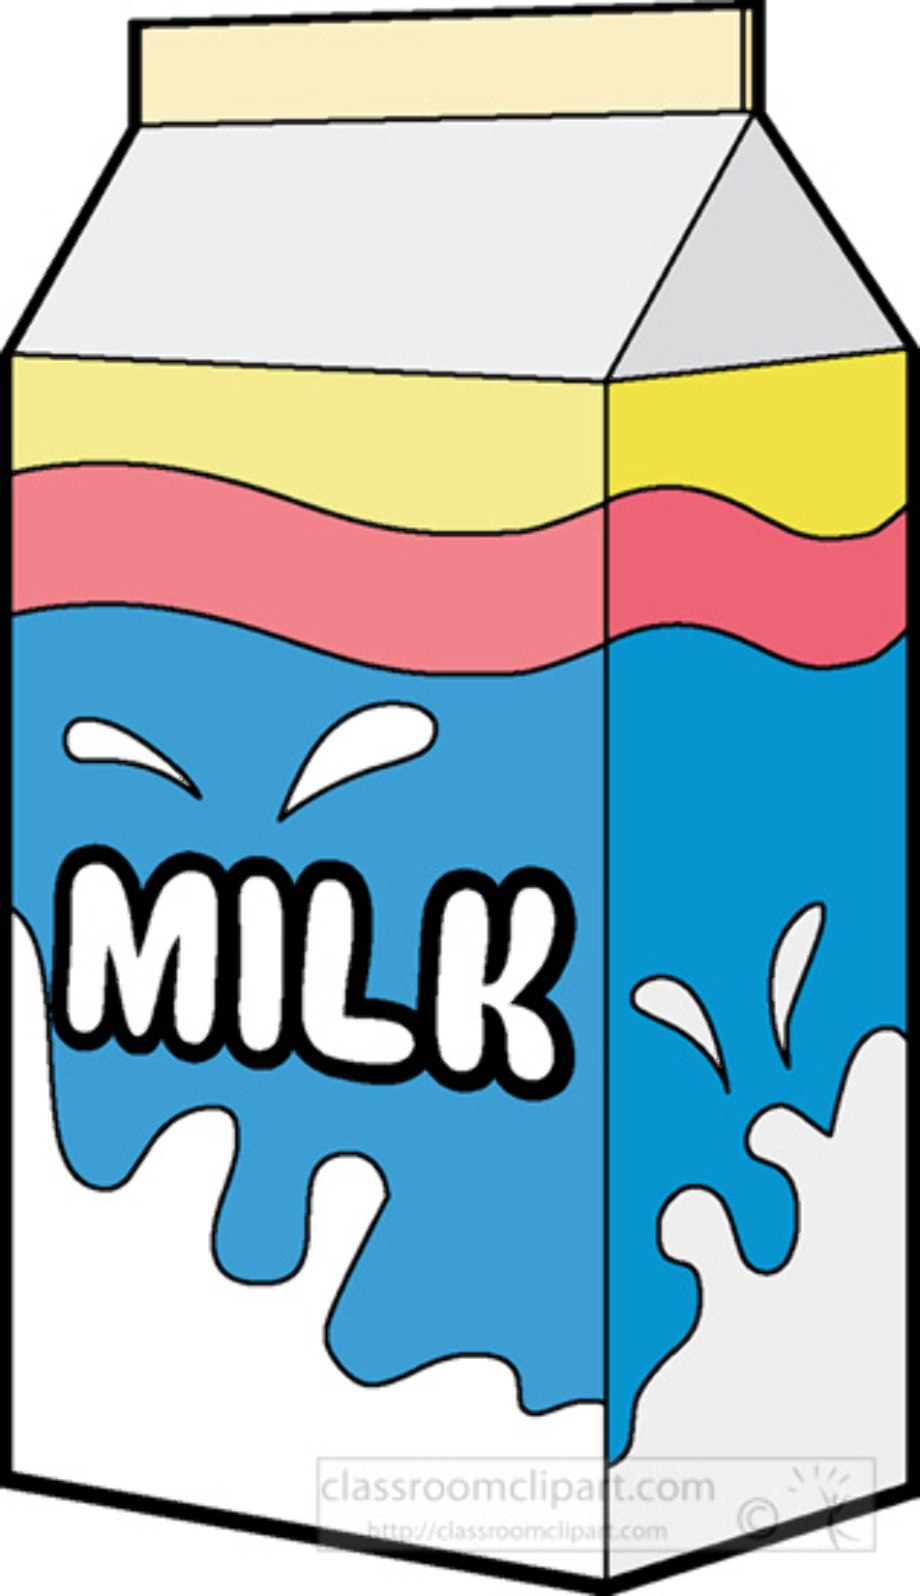 milk clipart cartoon